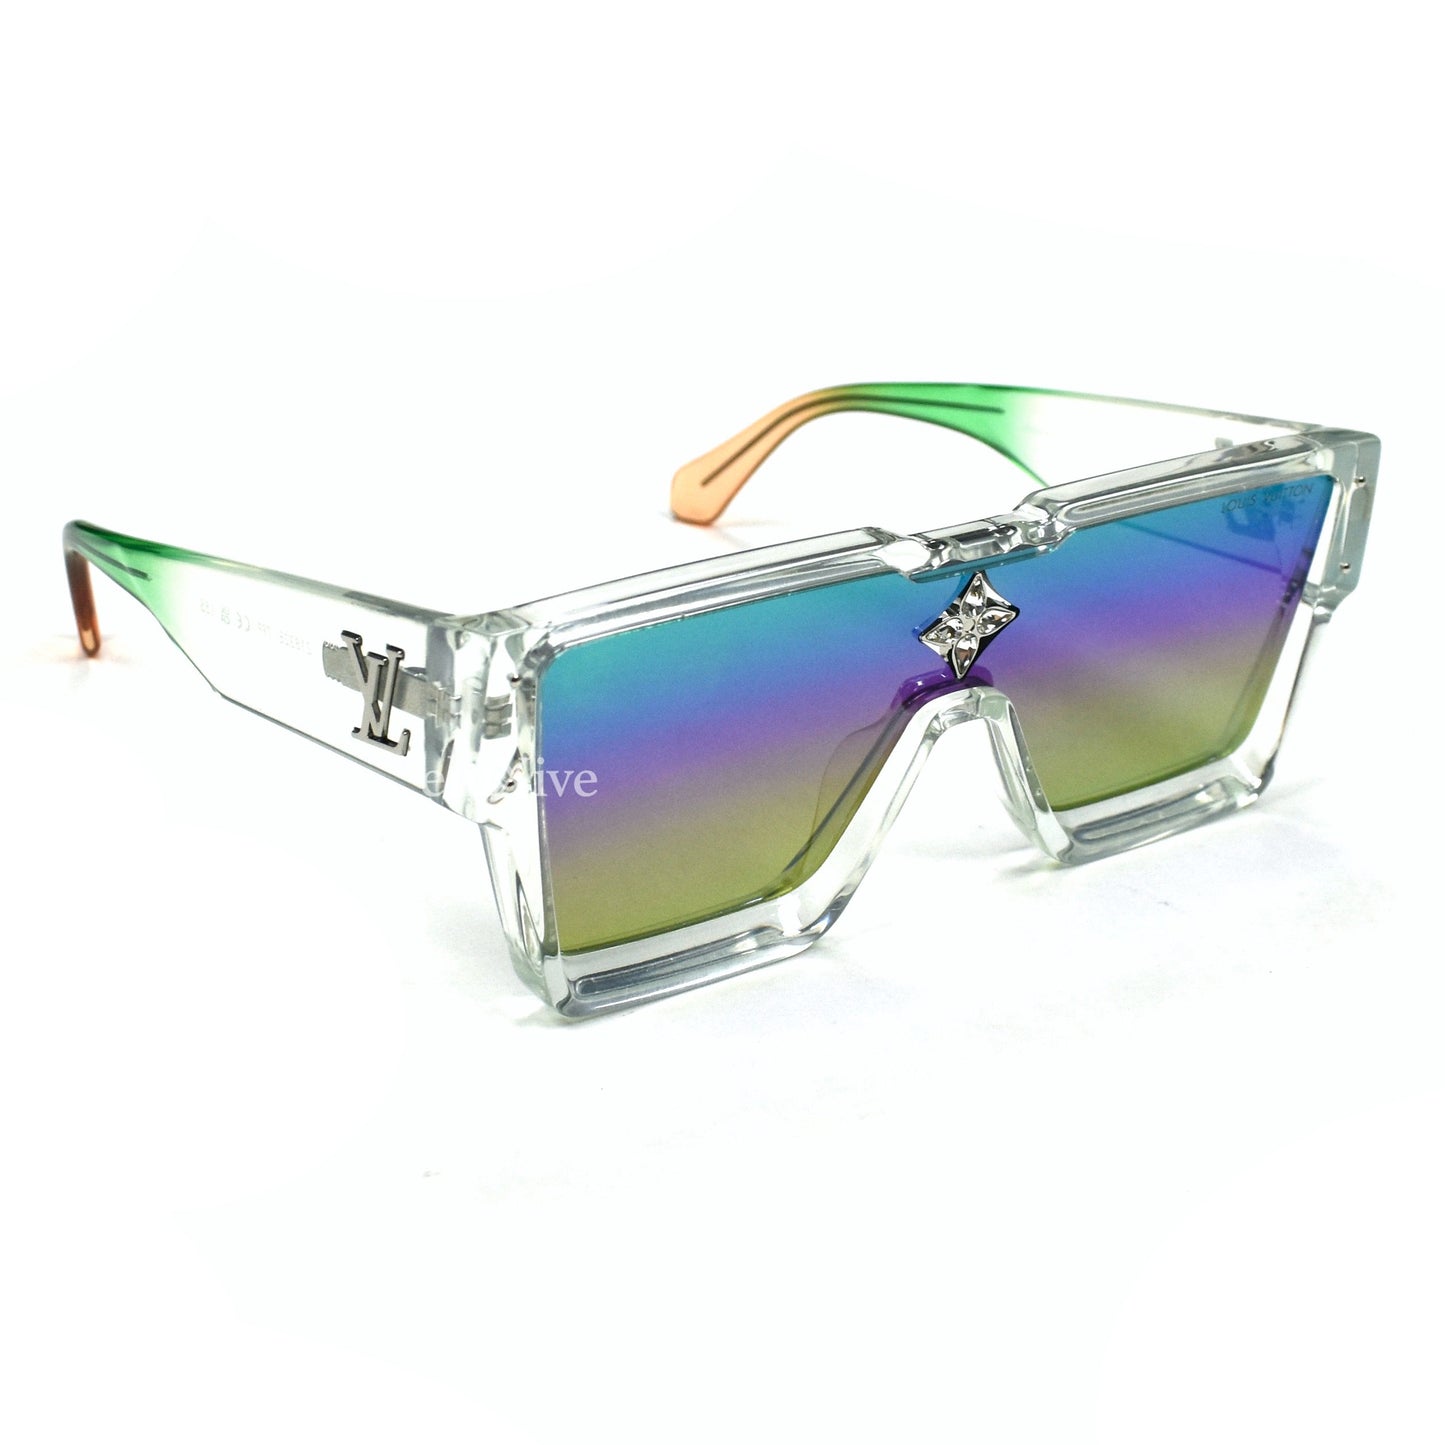 Louis Vuitton Authenticated Sunglasses